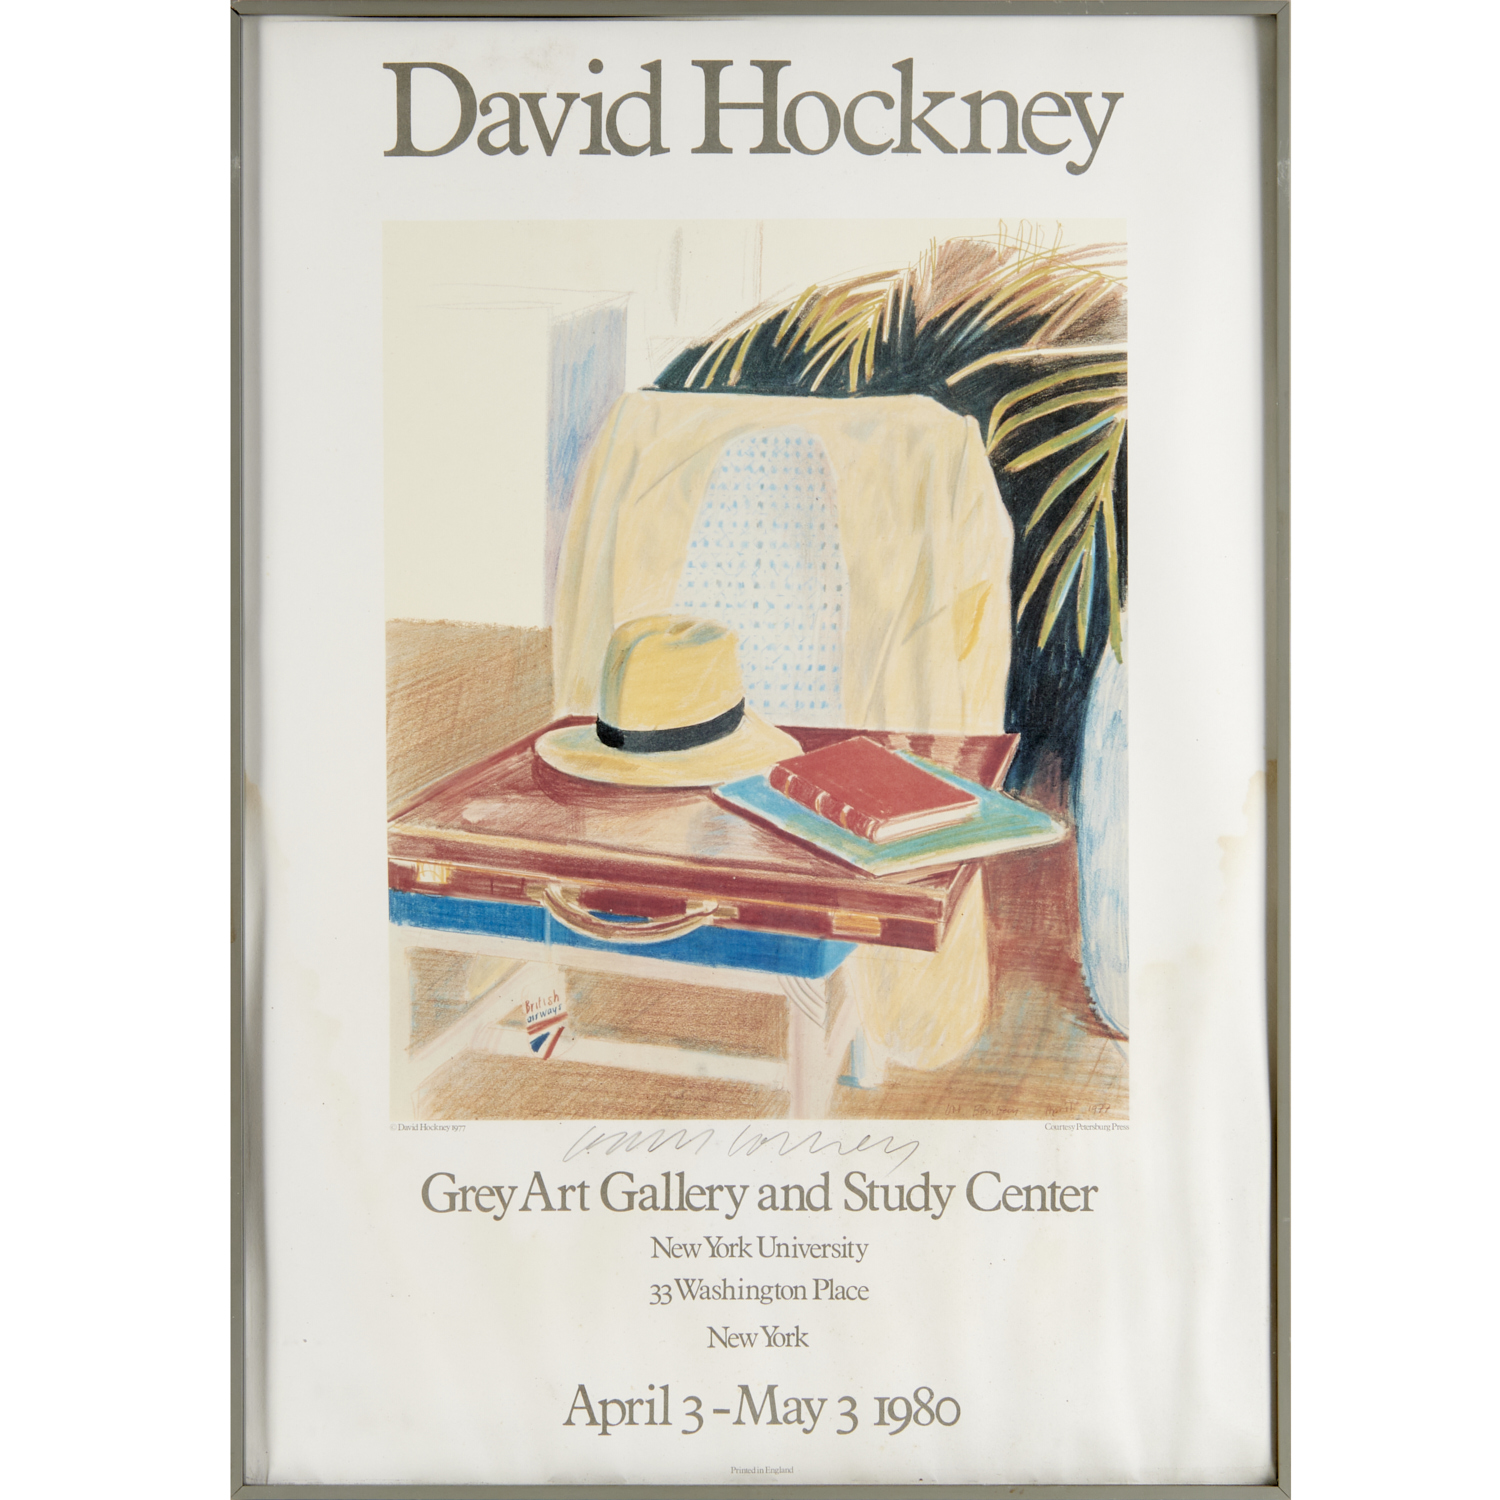 DAVID HOCKNEY SIGNED POSTER 1980 360d60